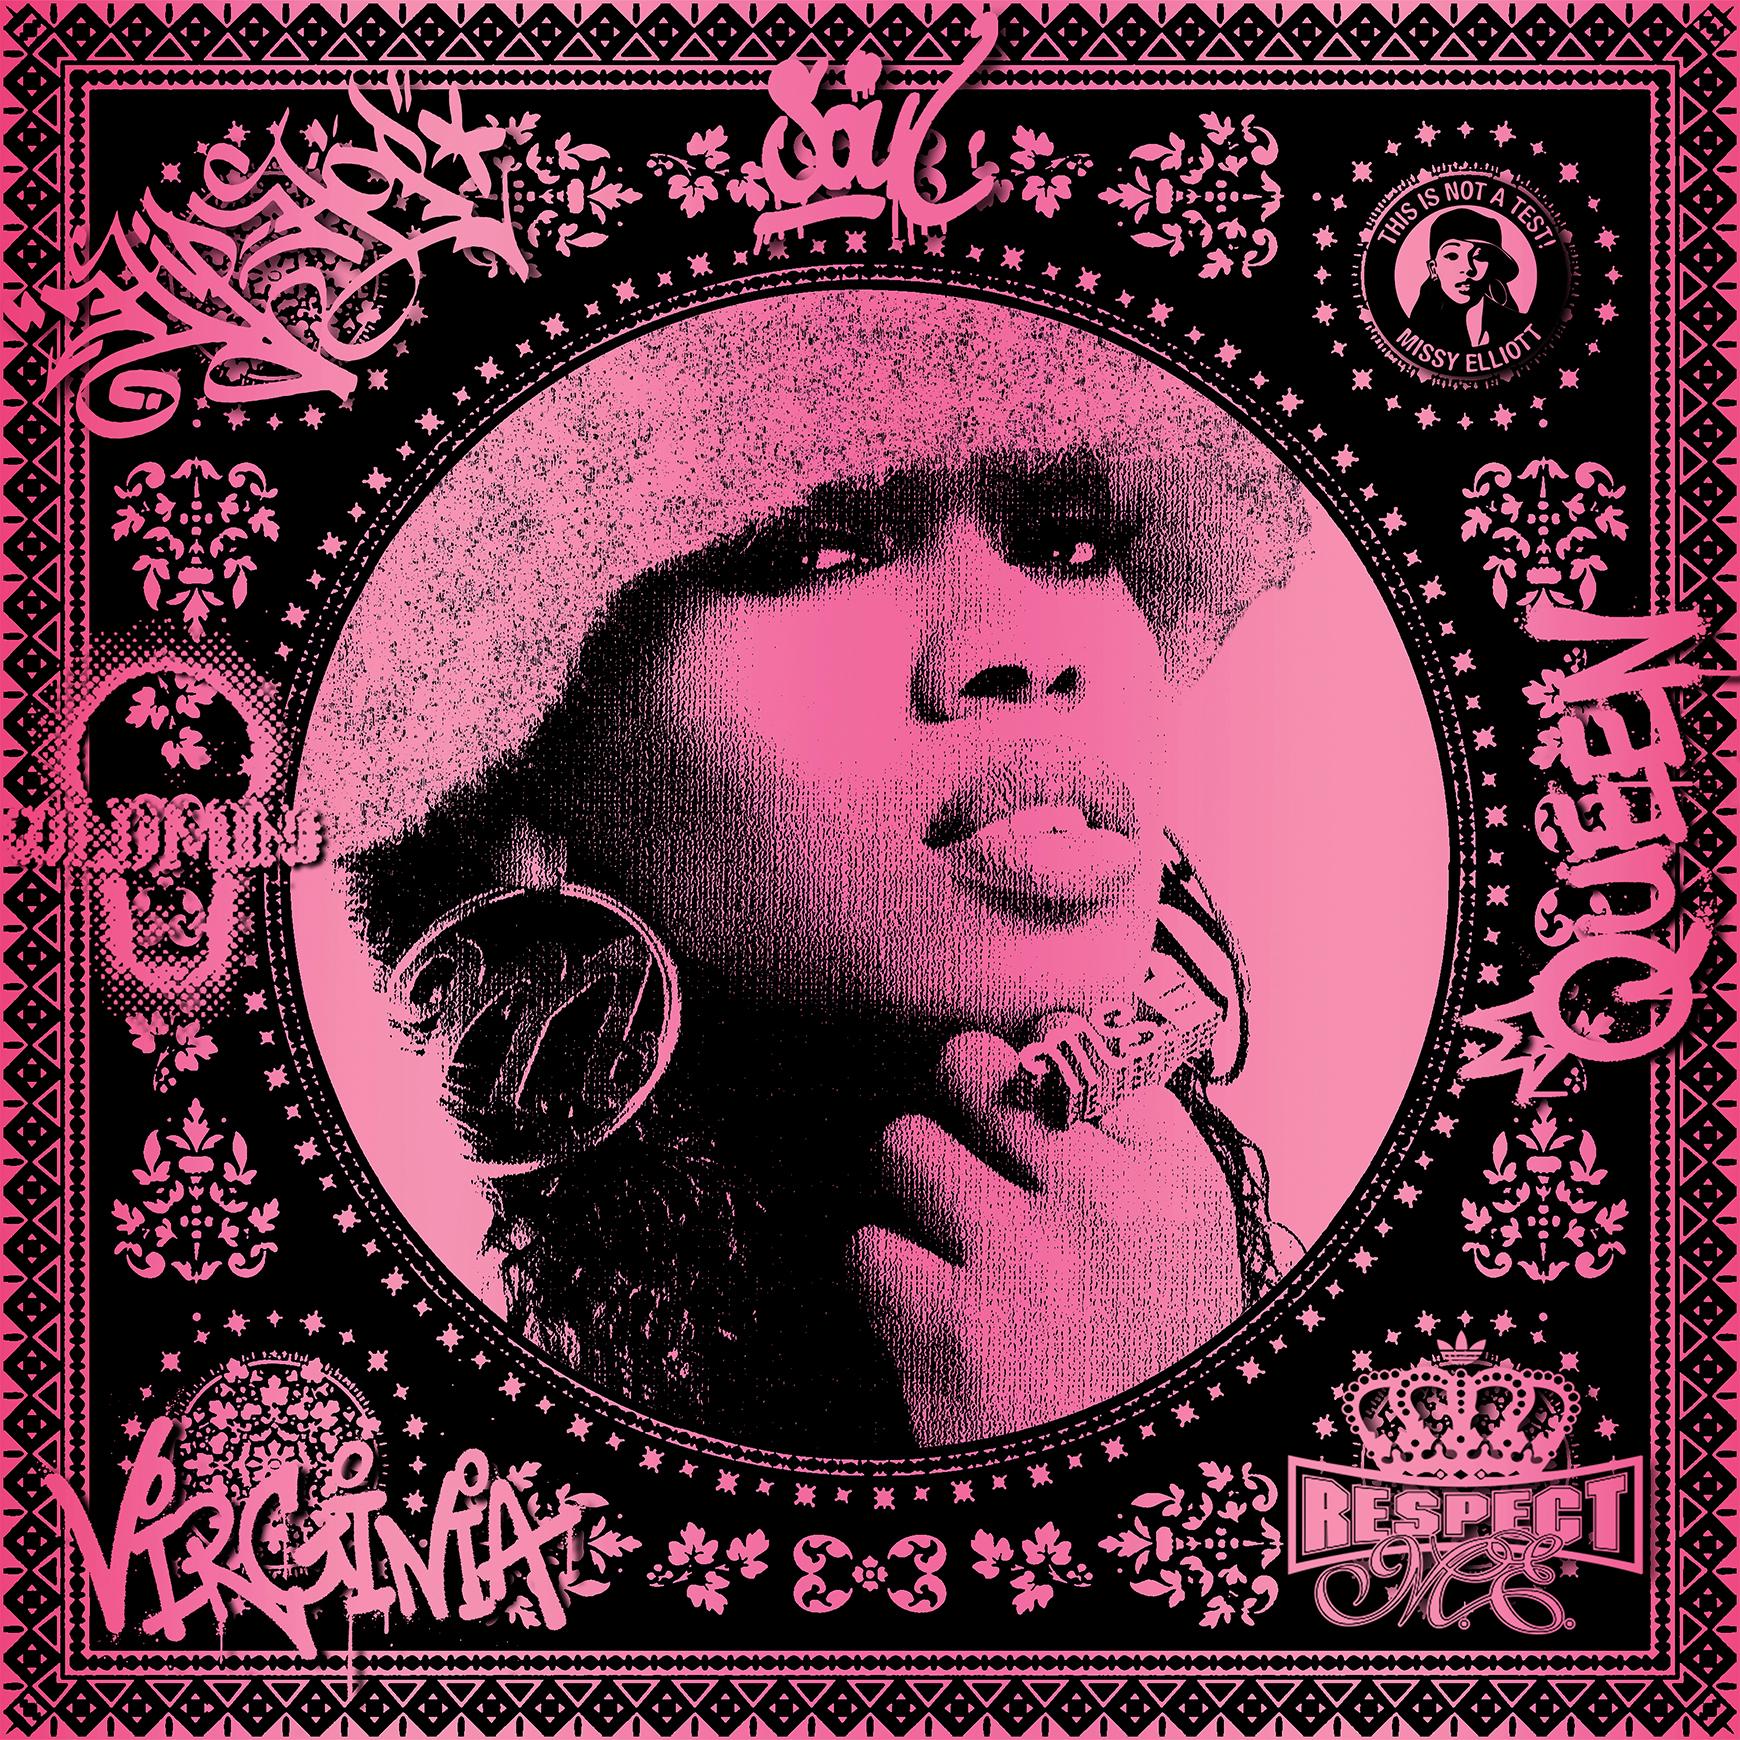 Missy Elliott (Pink) (50 Years, Hip Hop, Rap, Iconic, Artist, Musician, Rapper) - Print by Agent X